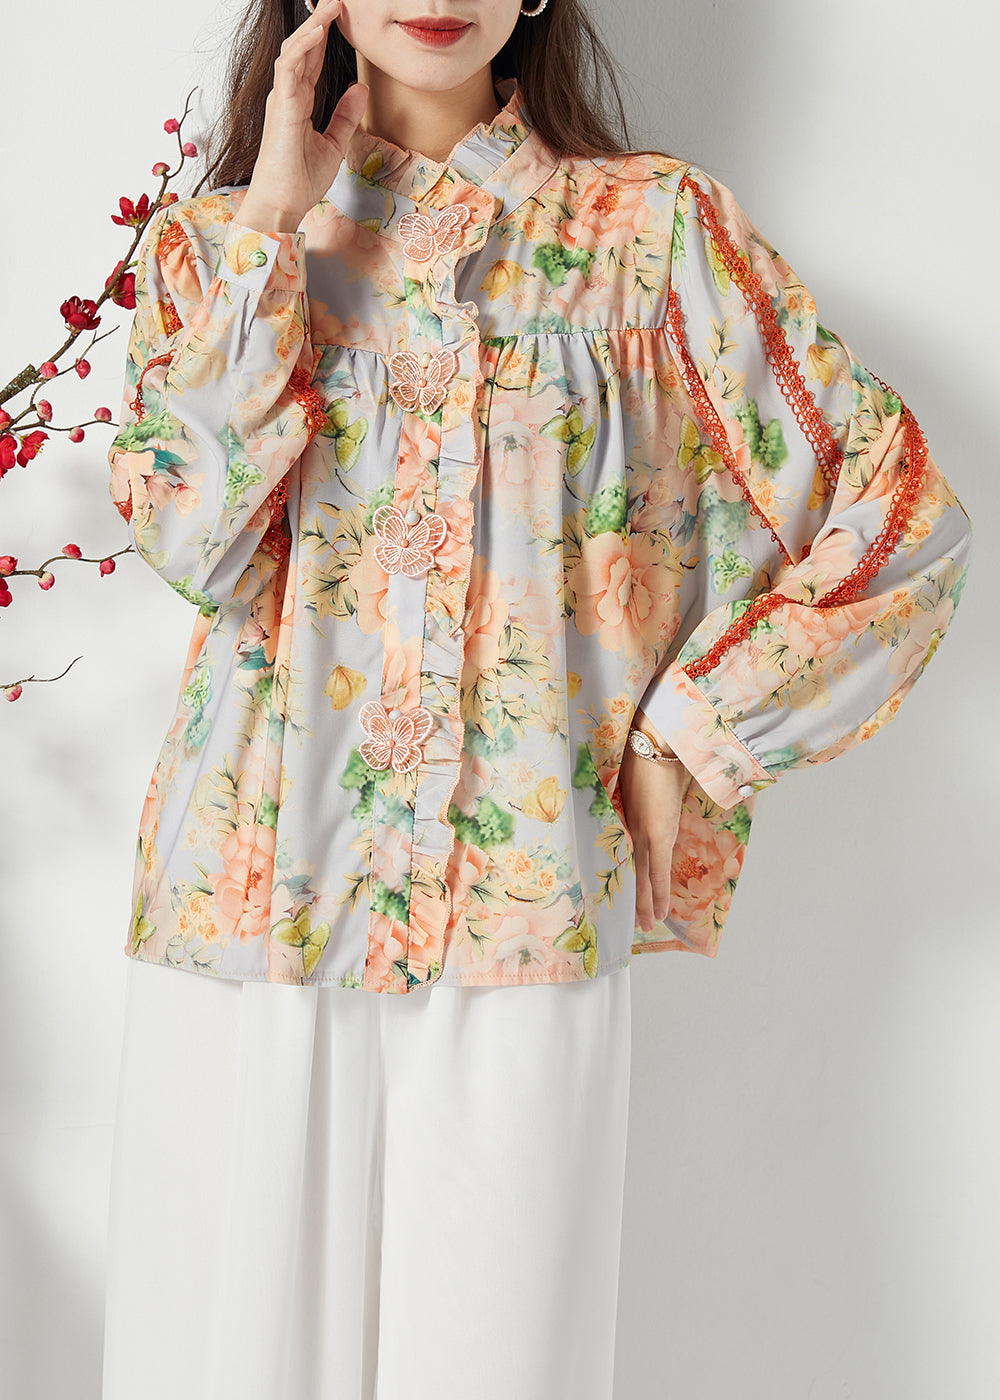 Plus Size Orange Ruffled Print Chiffon Shirt Top Spring LY1120 - fabuloryshop